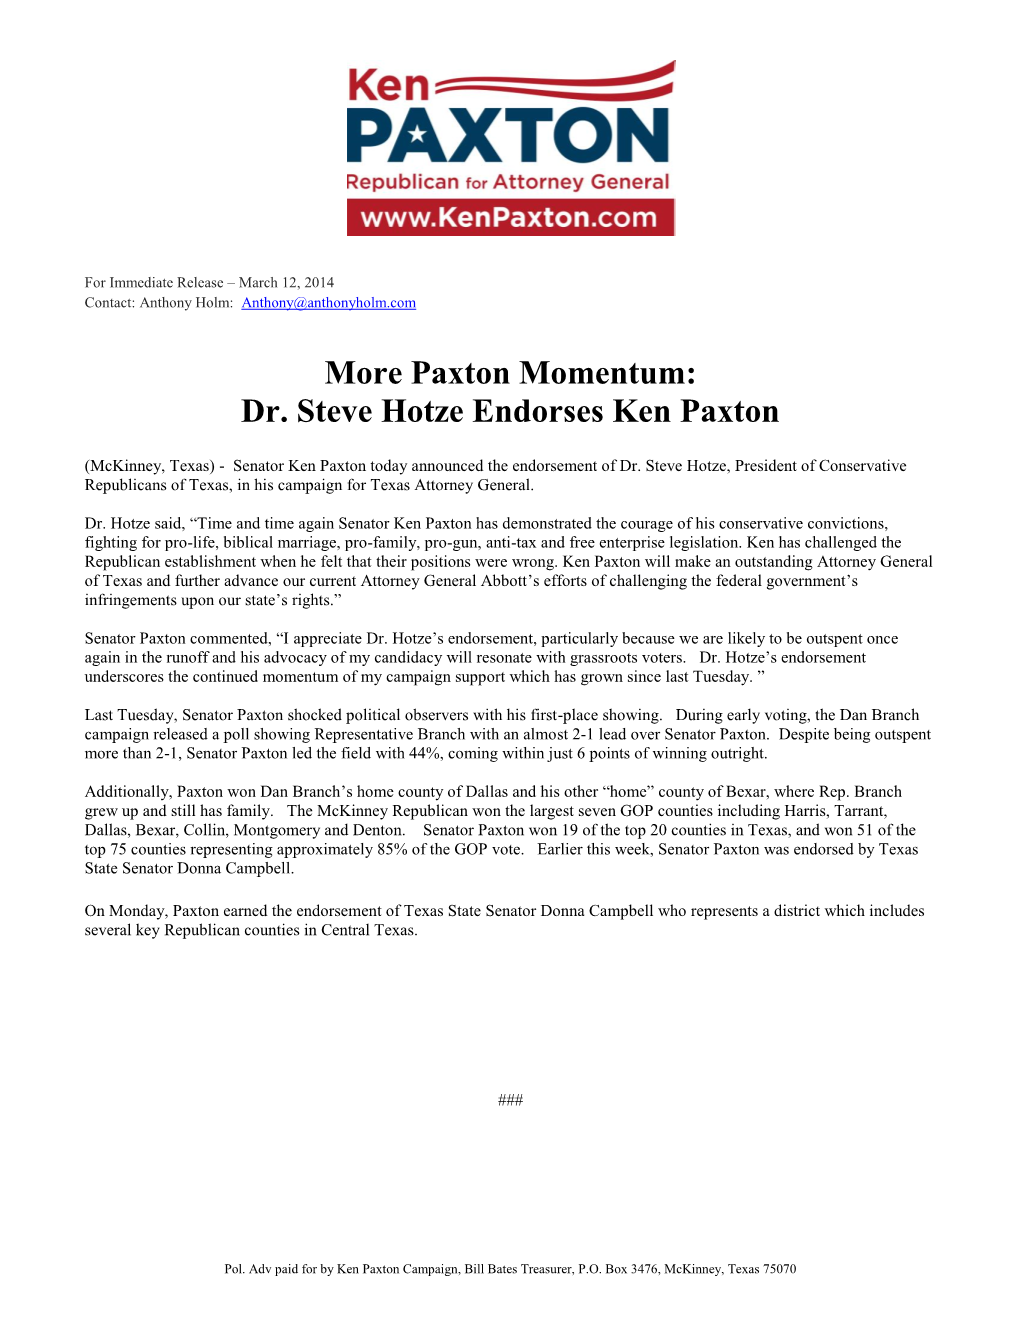 More Paxton Momentum: Dr. Steve Hotze Endorses Ken Paxton